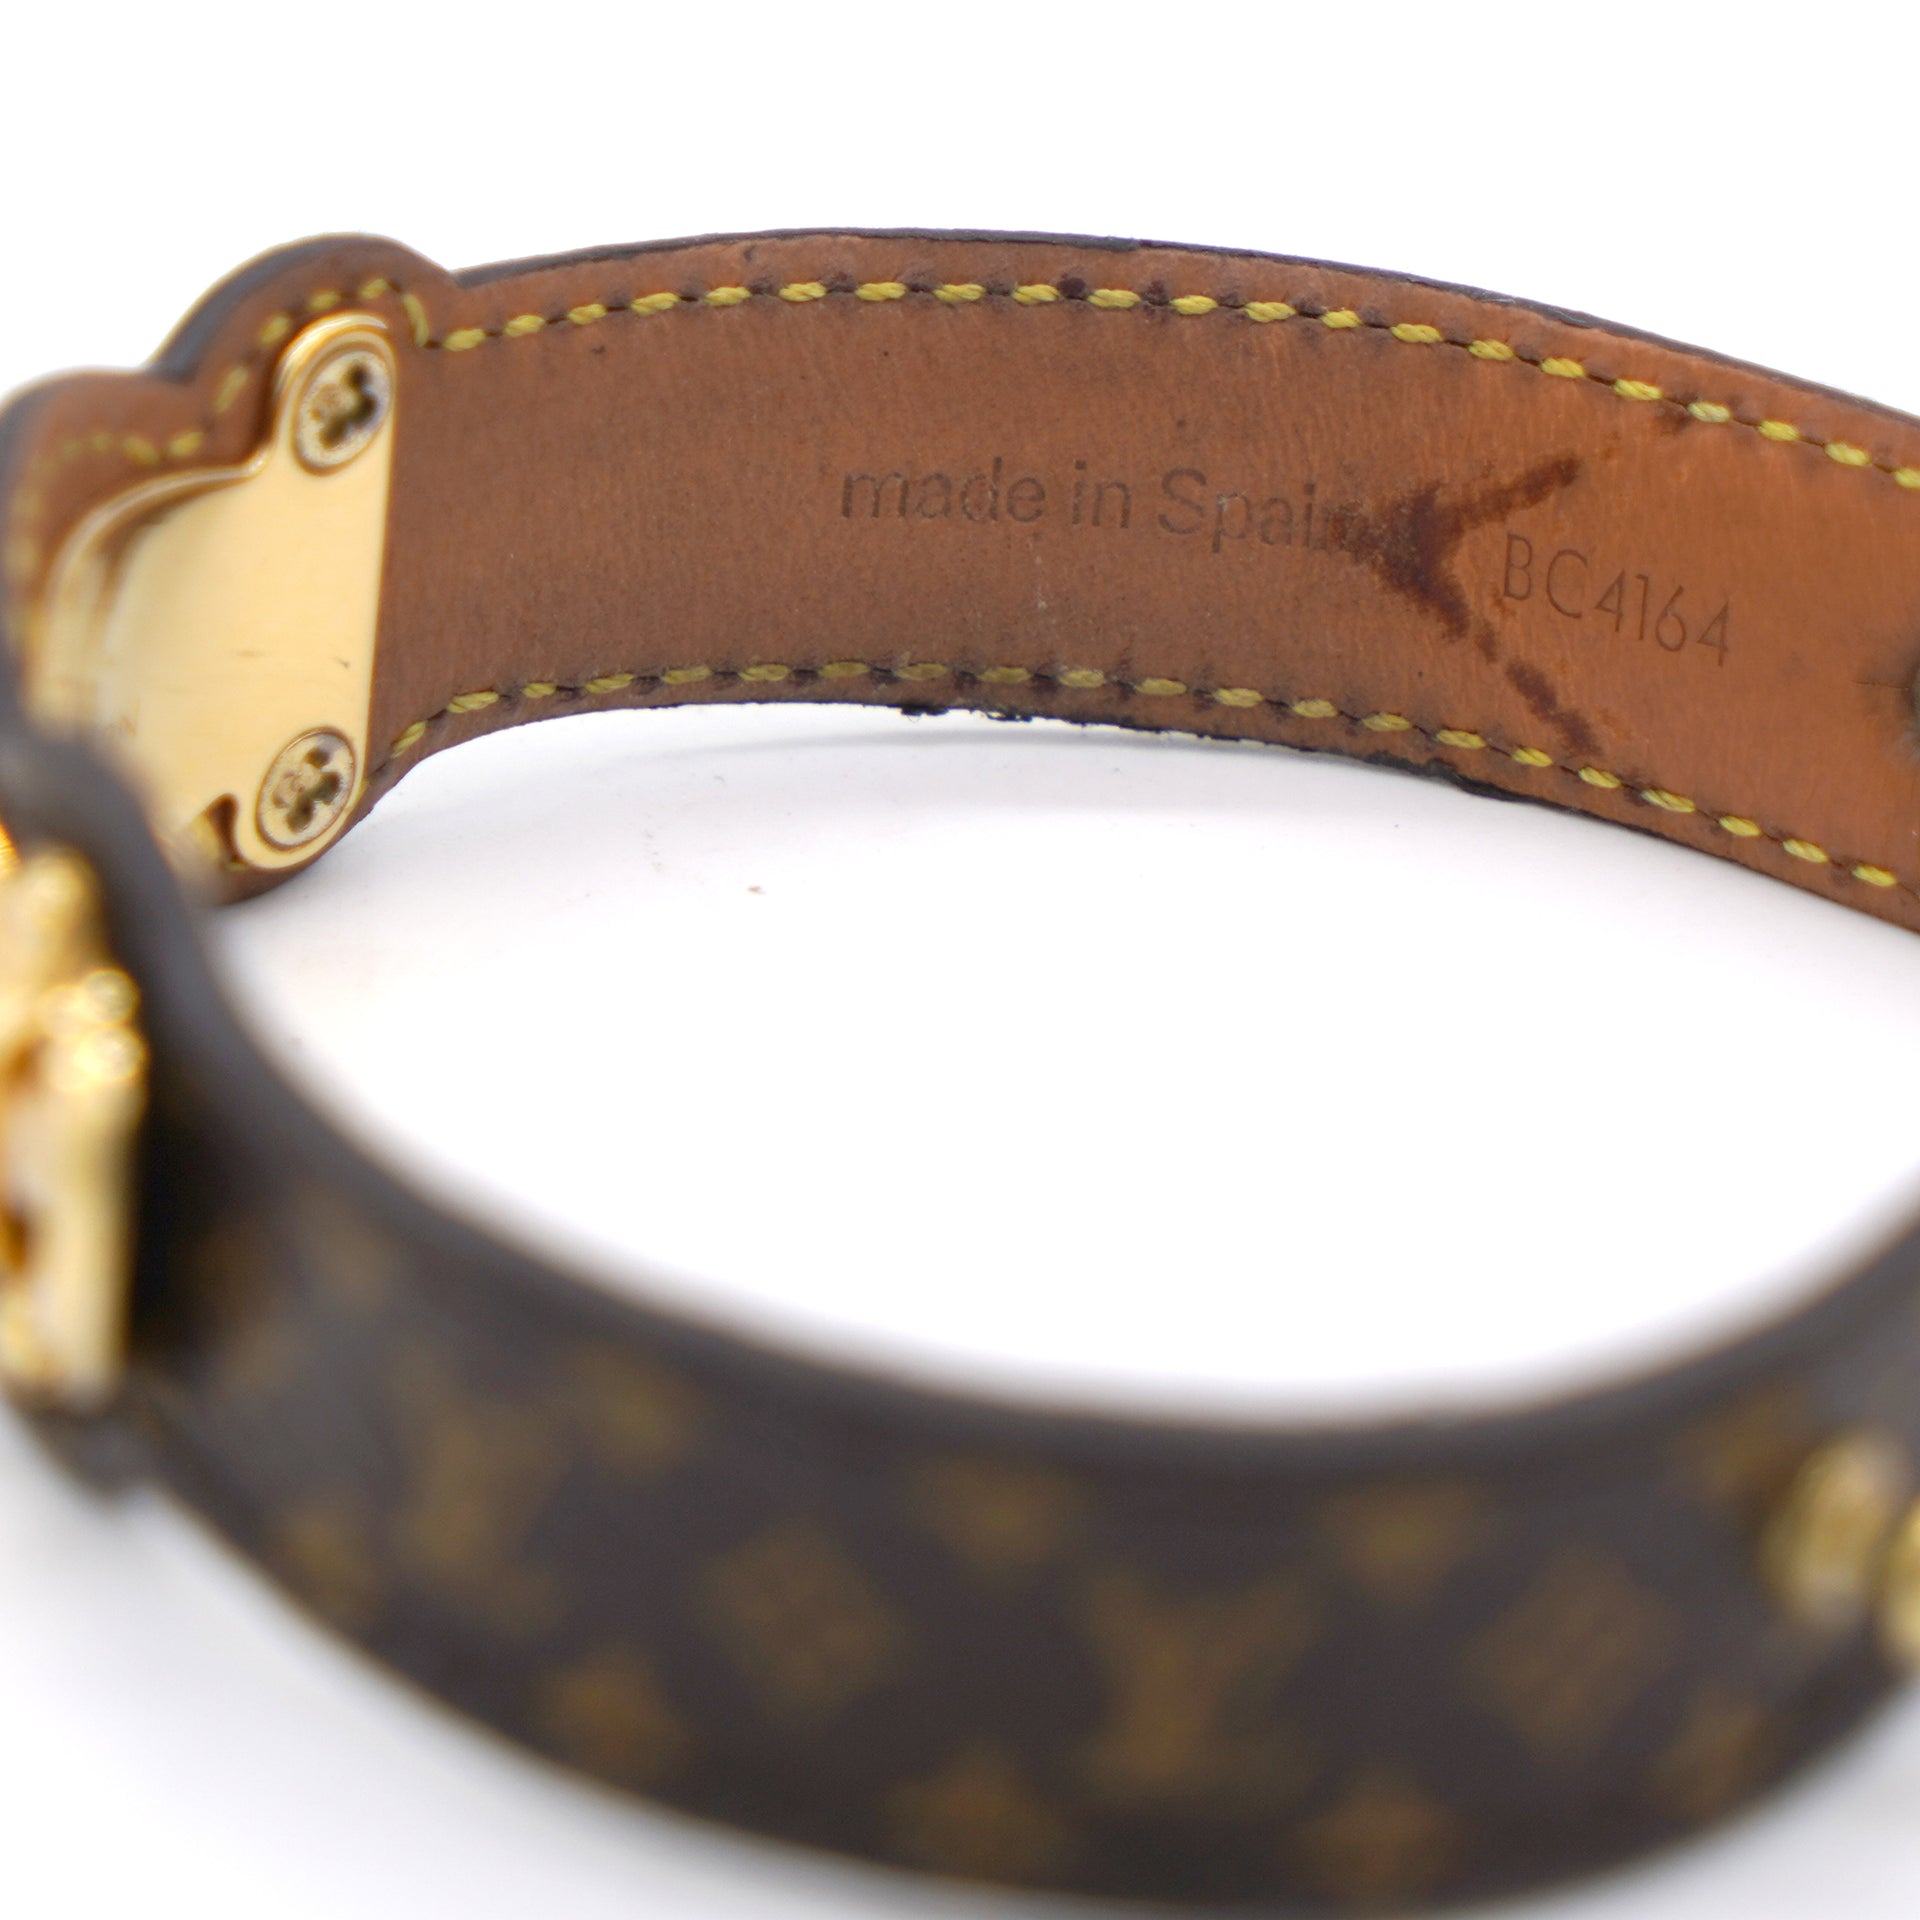 Louis Vuitton Monogram Nano Bracelet 17 - Annie Rooster's Sally